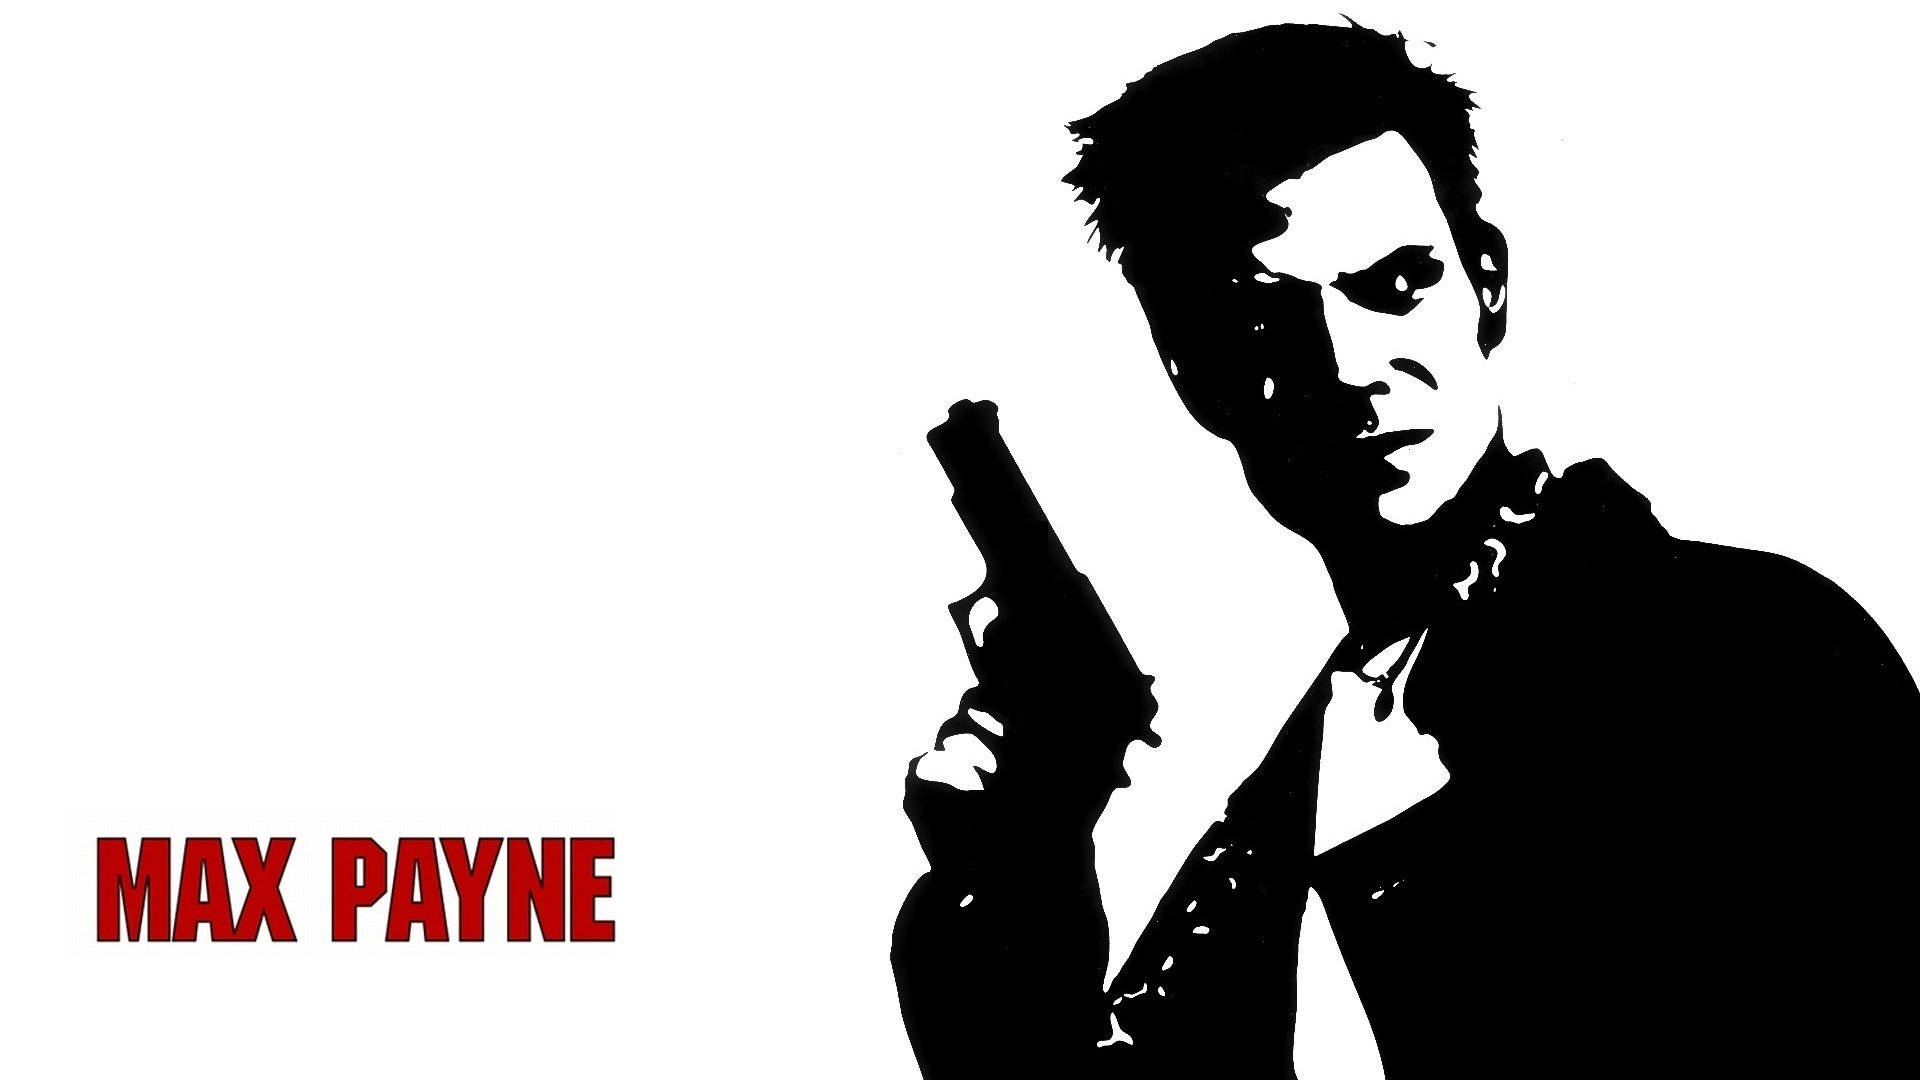 Top 999+ Max Payne Wallpaper Full HD, 4K✅Free to Use